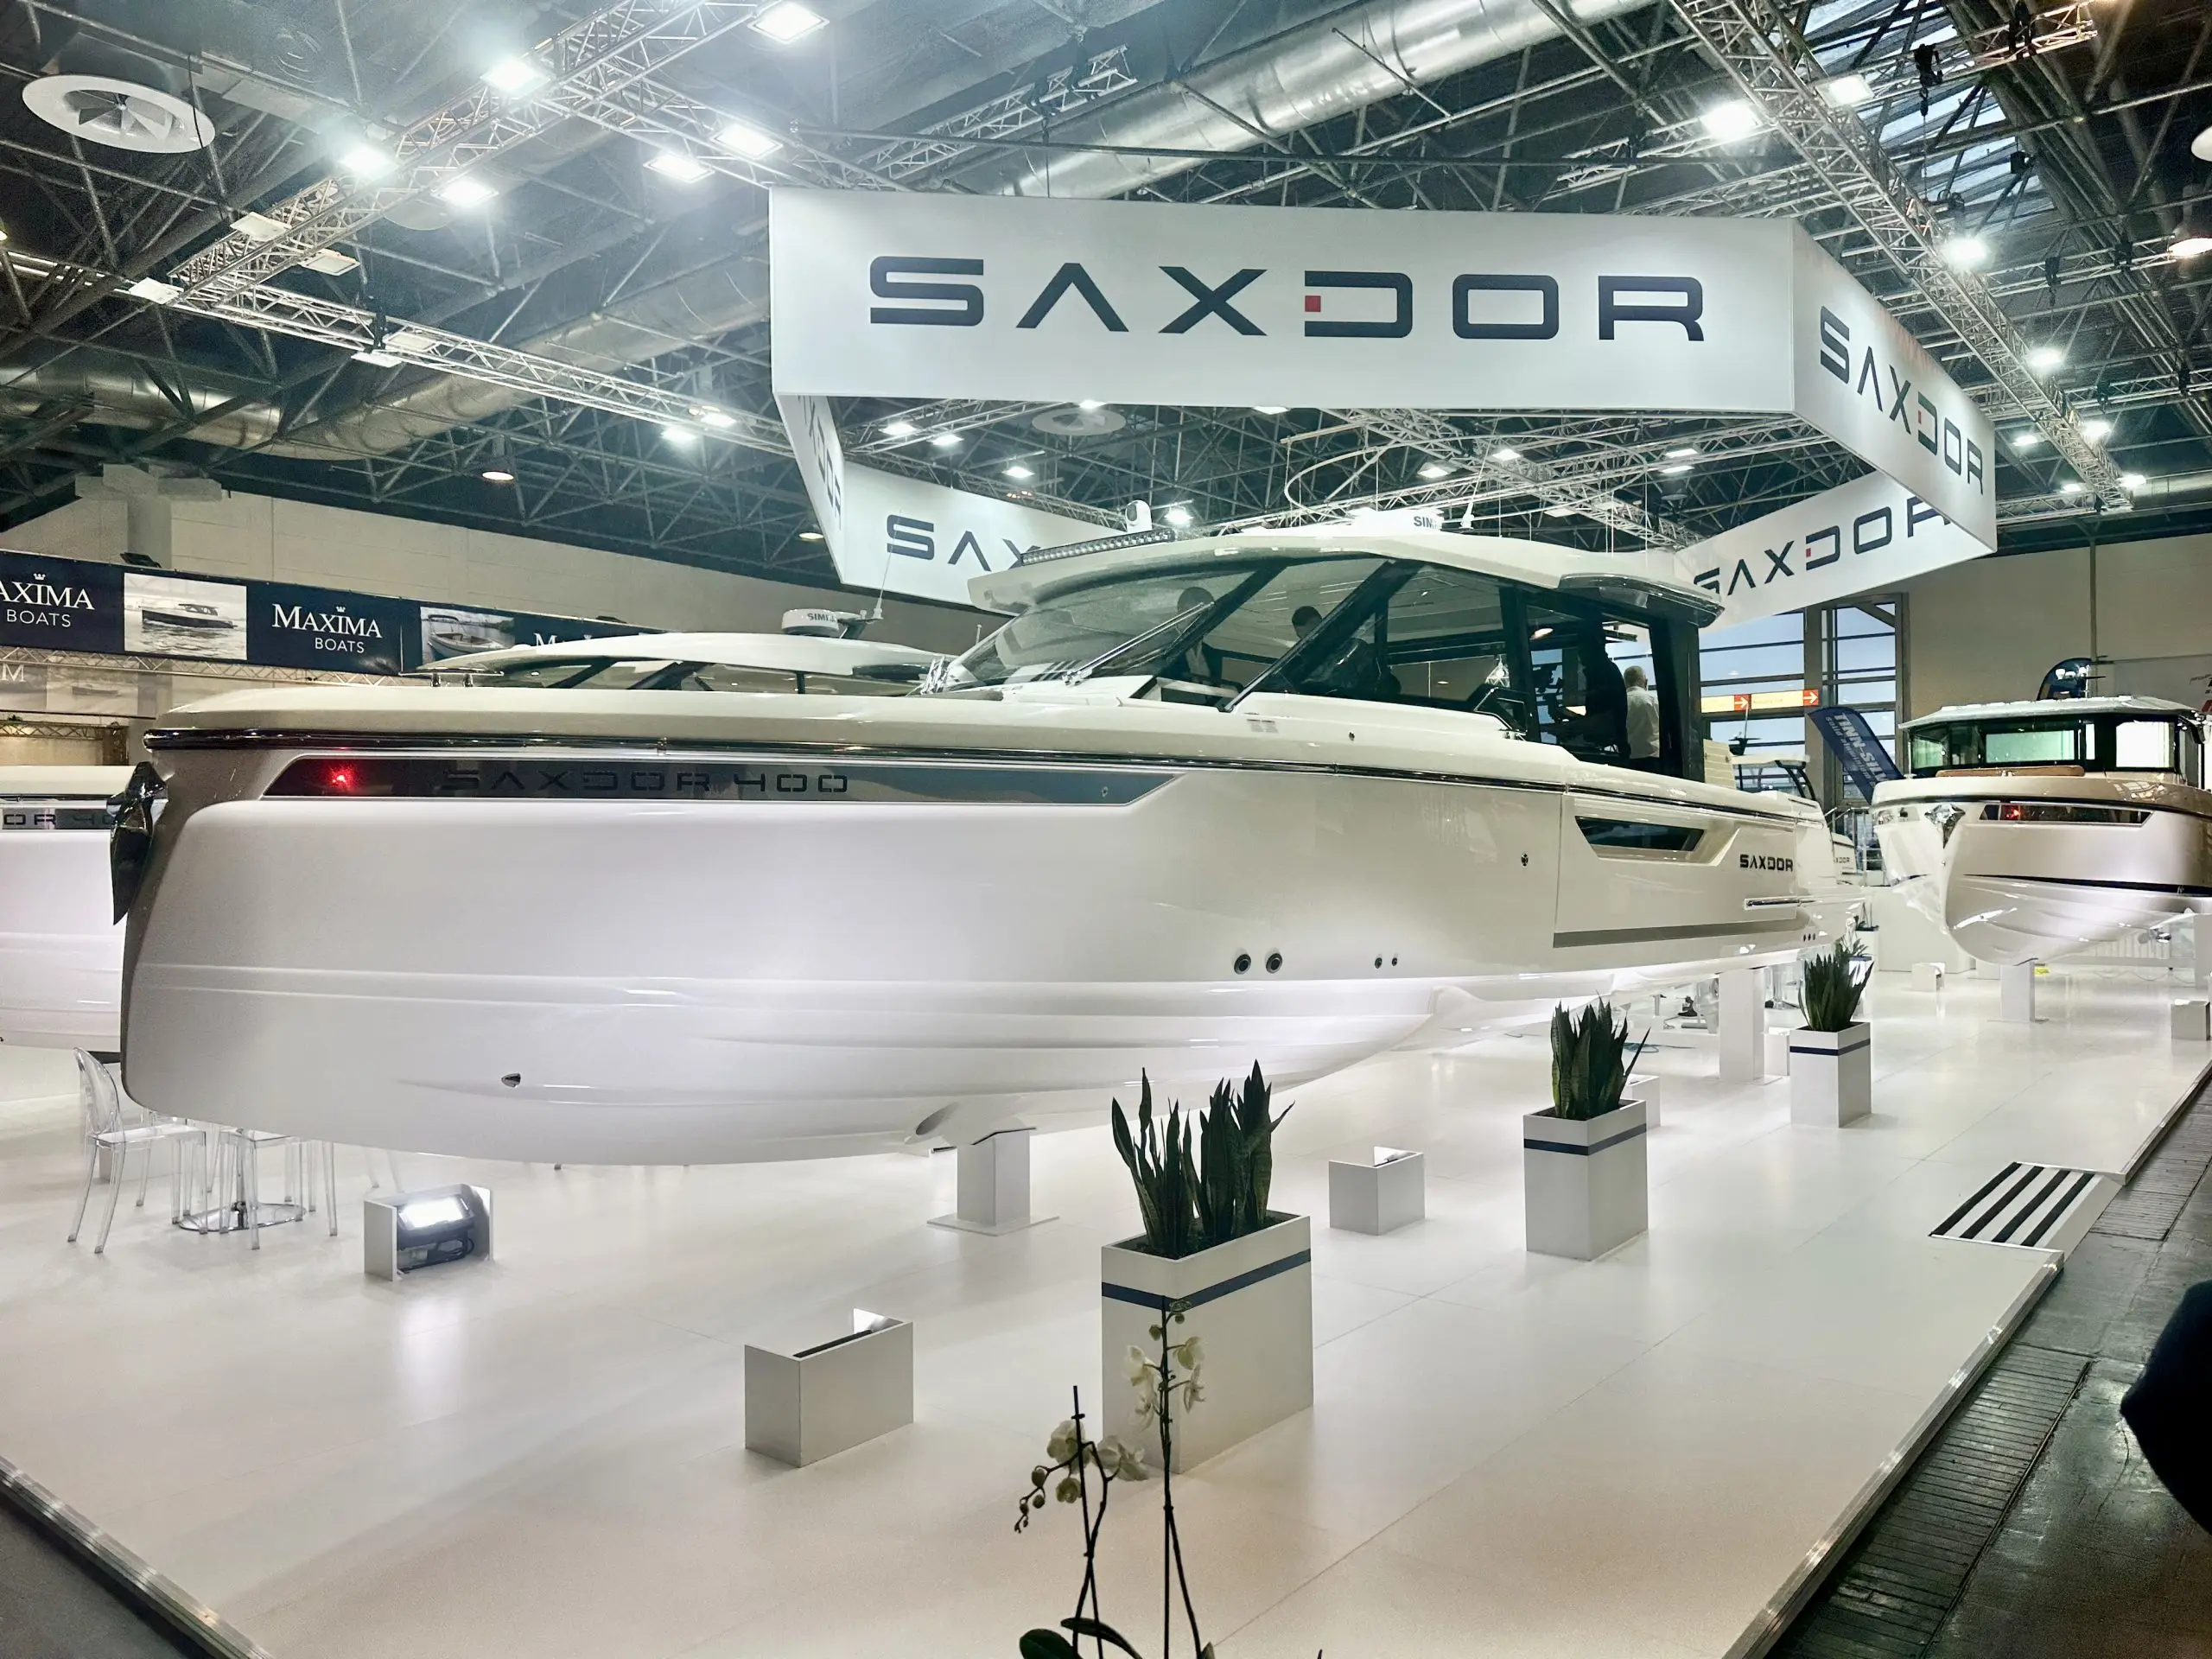 Saxdor 400 GTC